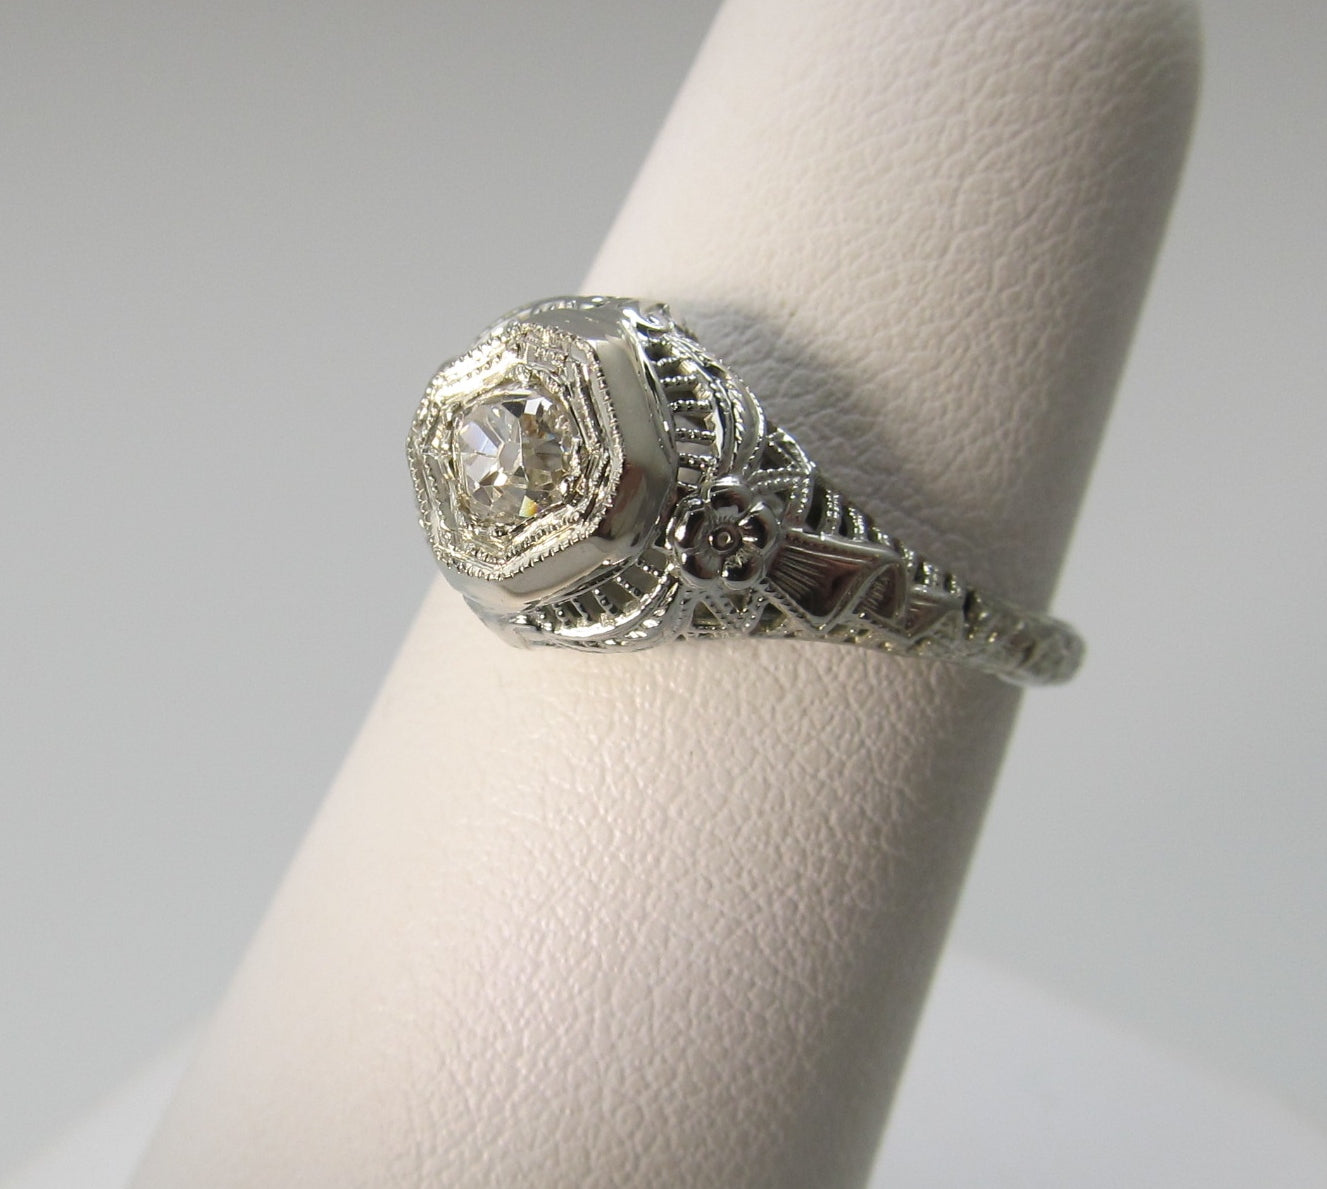 Antique filigree diamond engagement ring